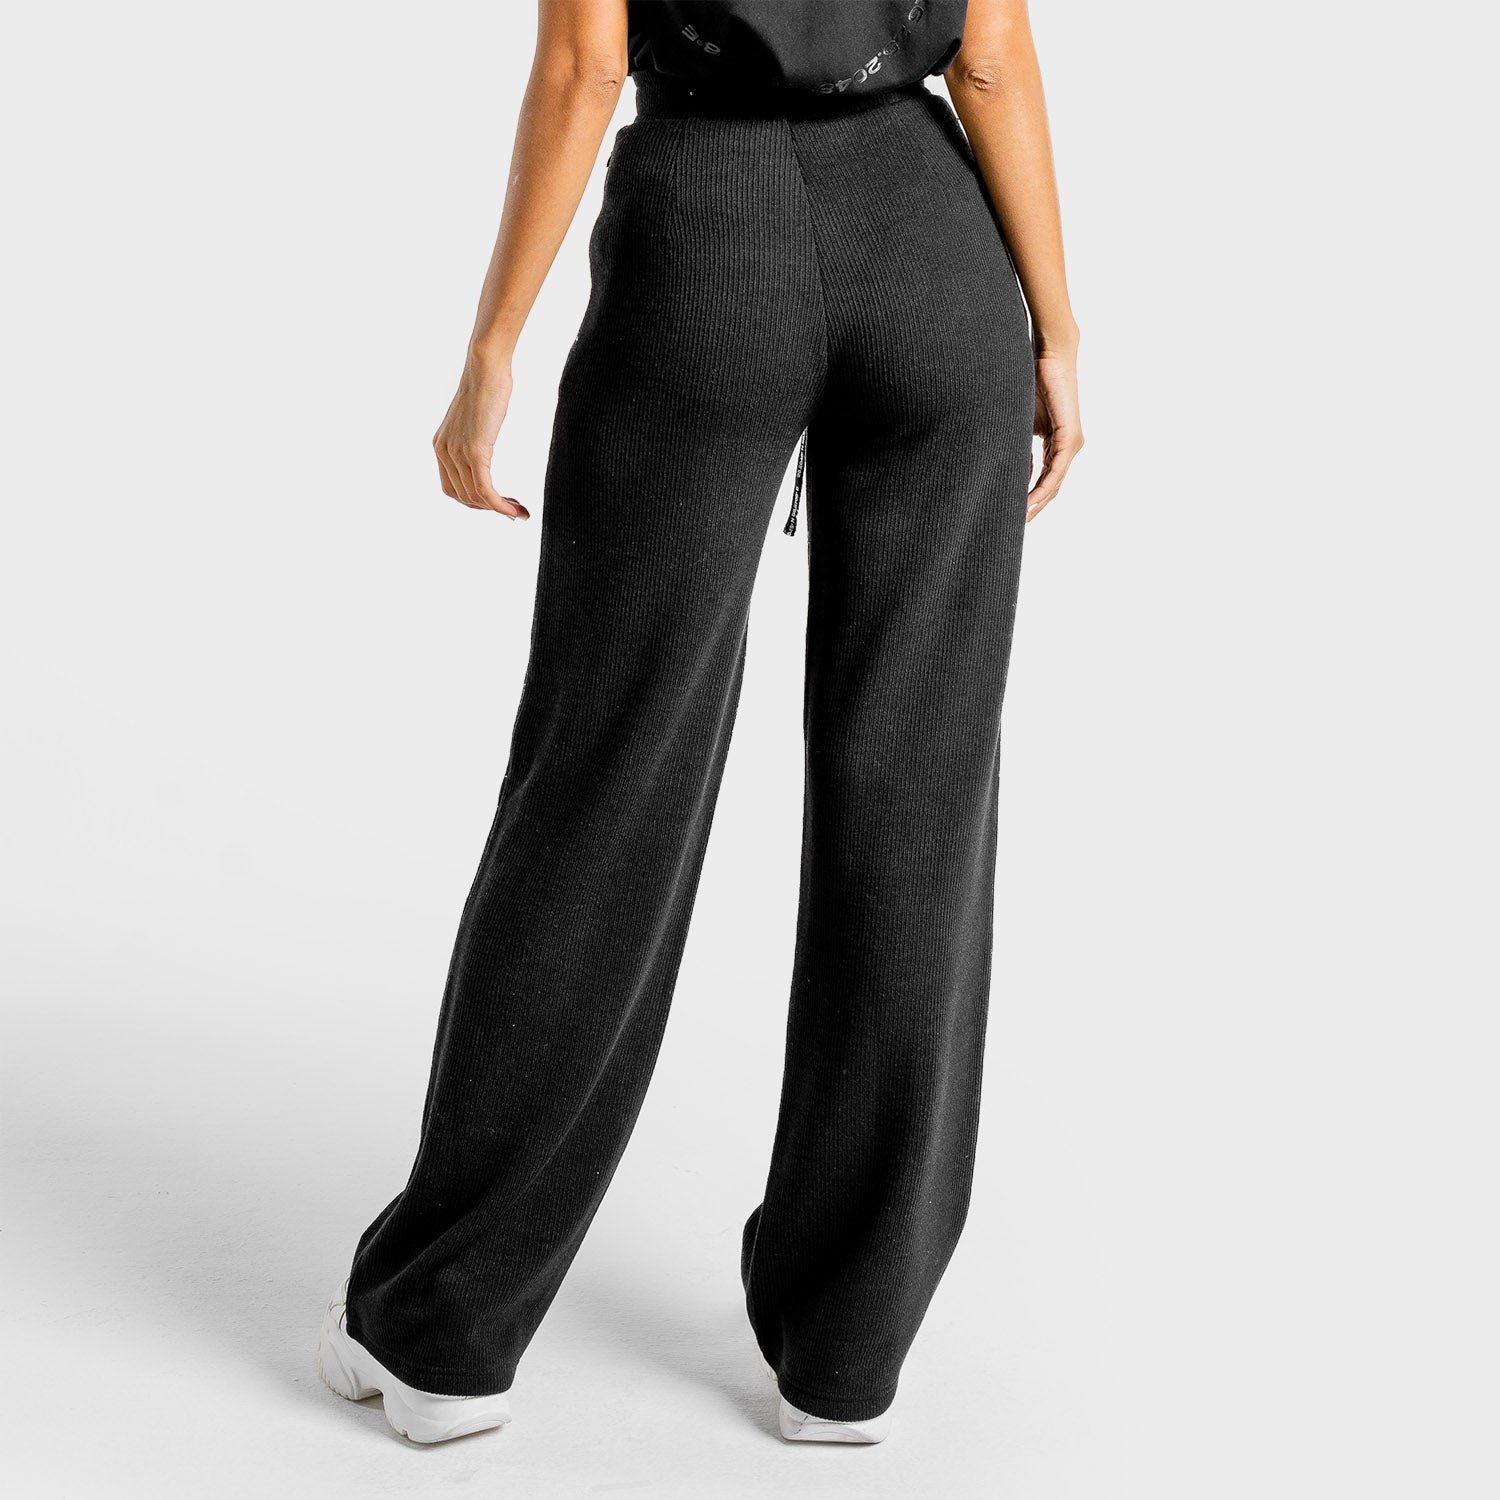 Luxe Wide Leg Pants - Olive | Workout Pants Women | SQUATWOLF